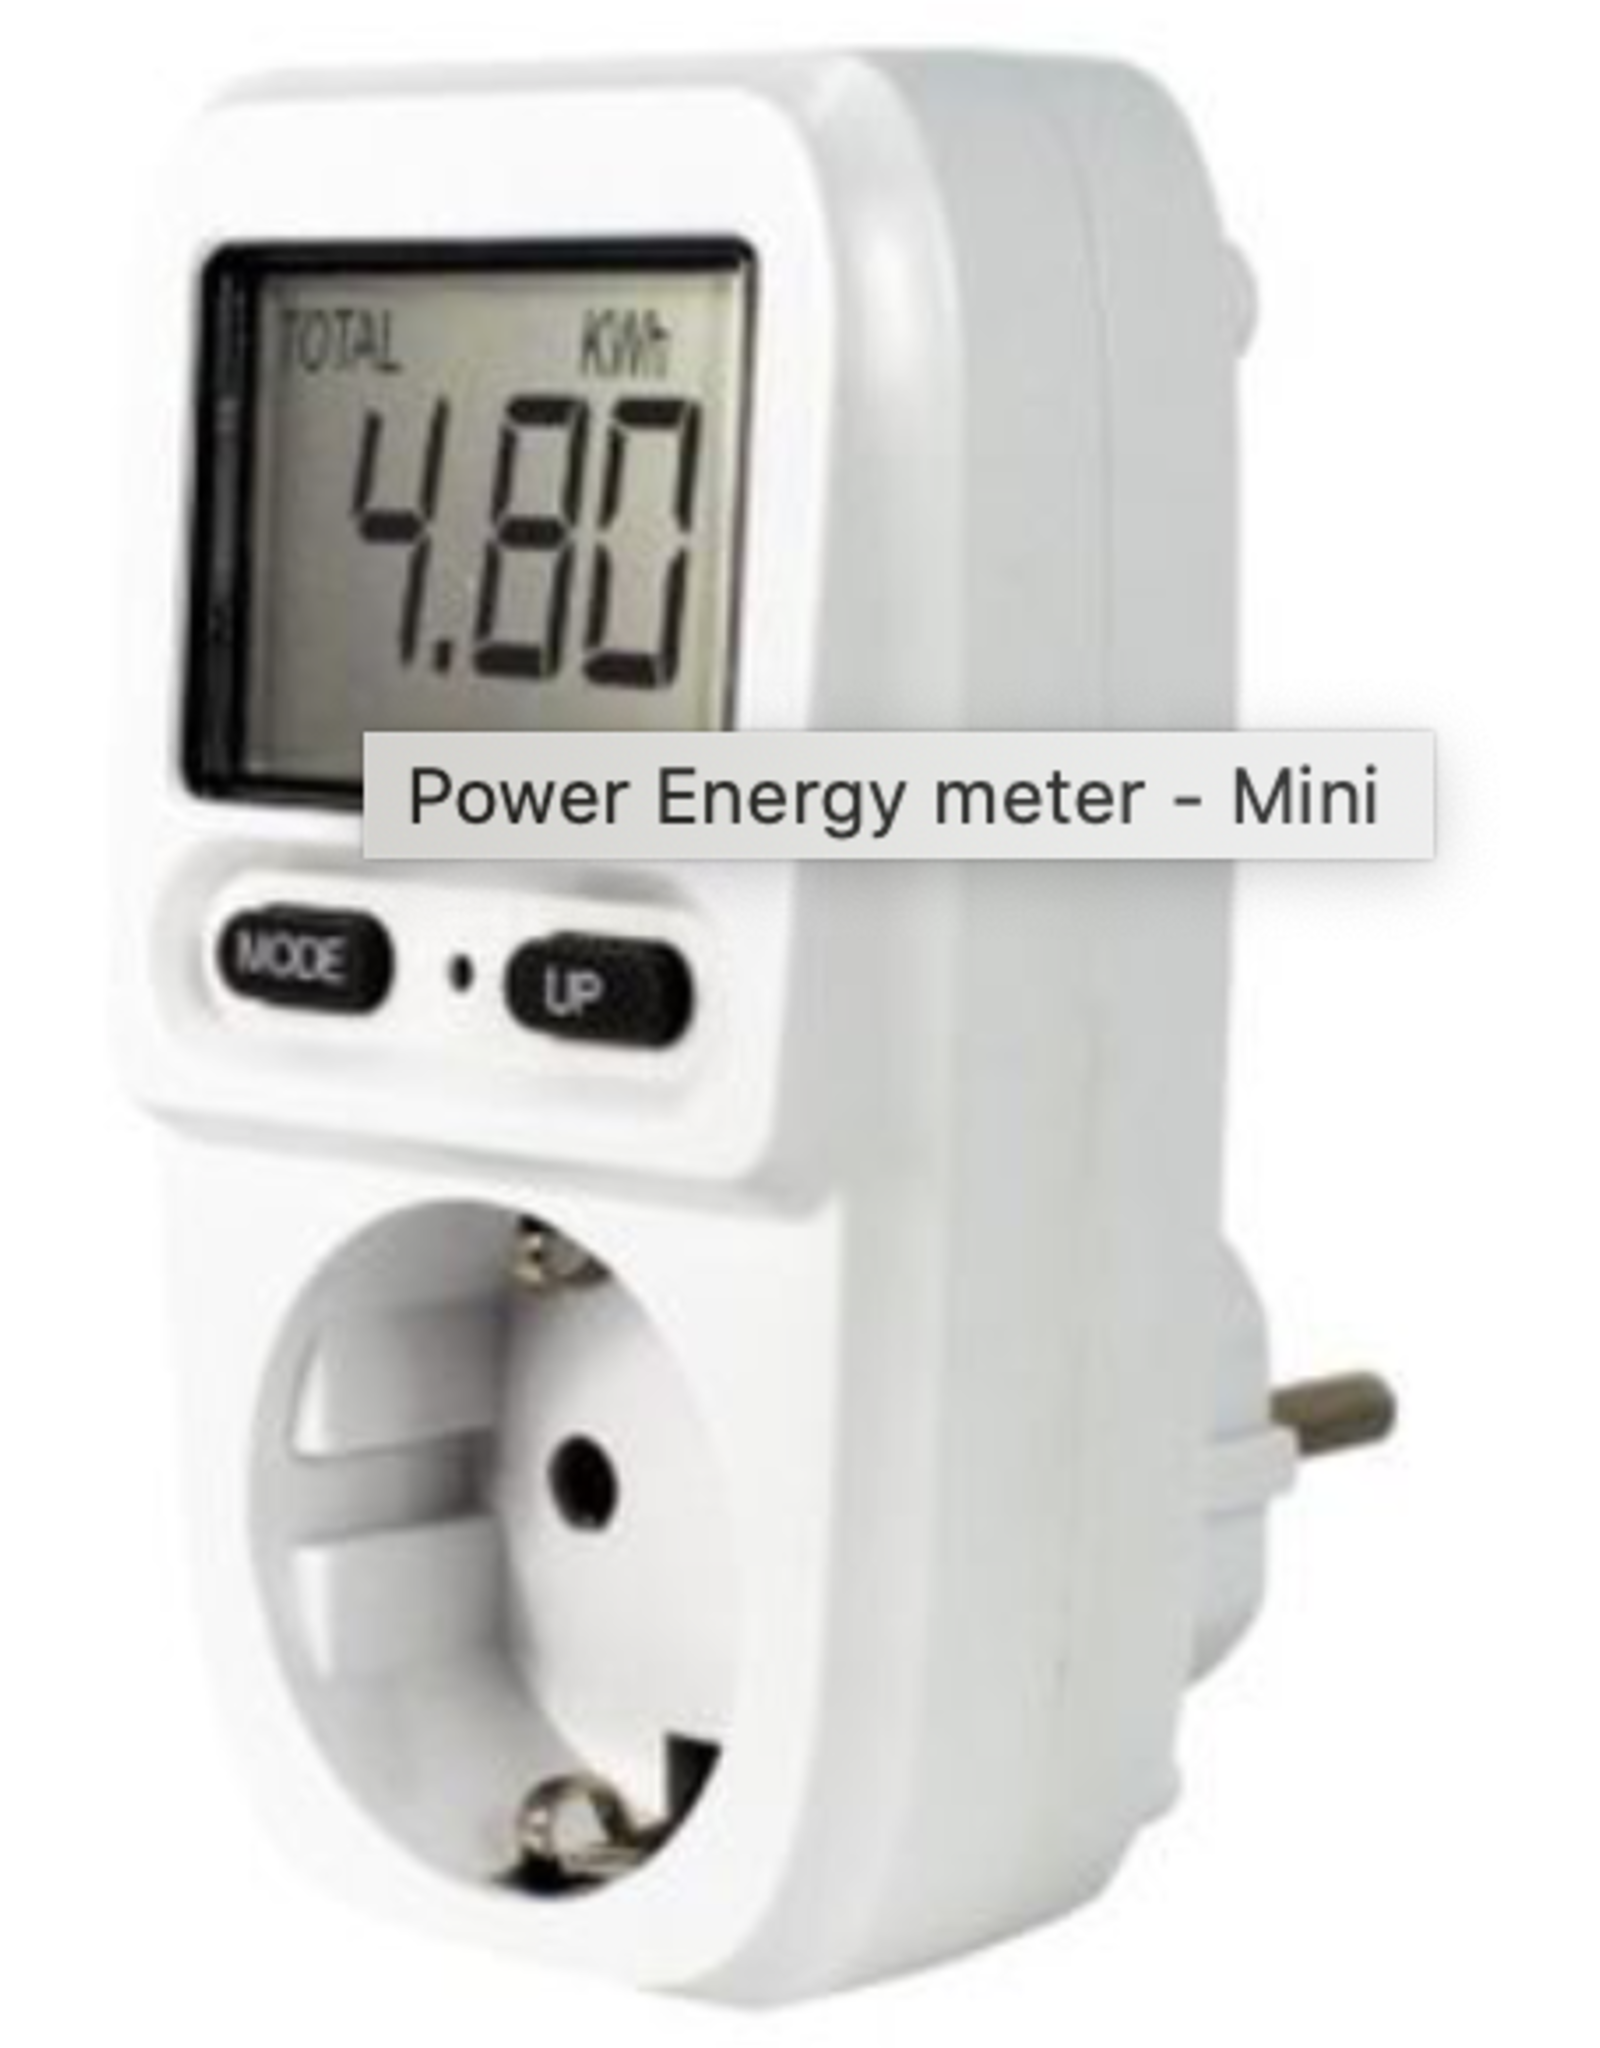 Power Energy meter - Mini